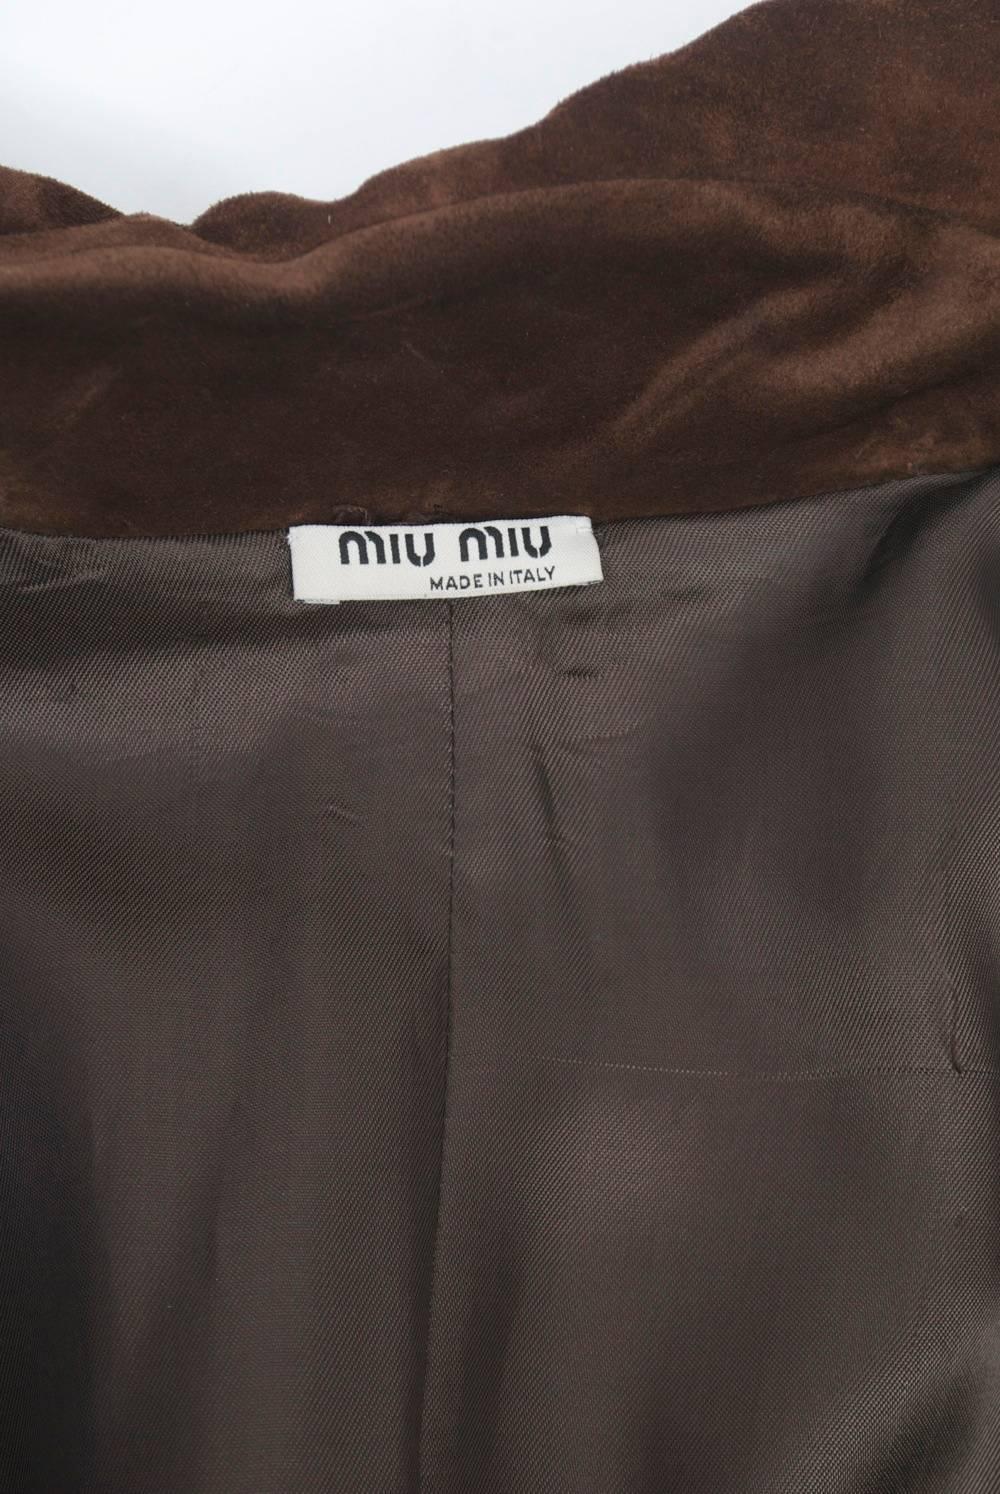 Miu Miu Brown Suede Coat 4